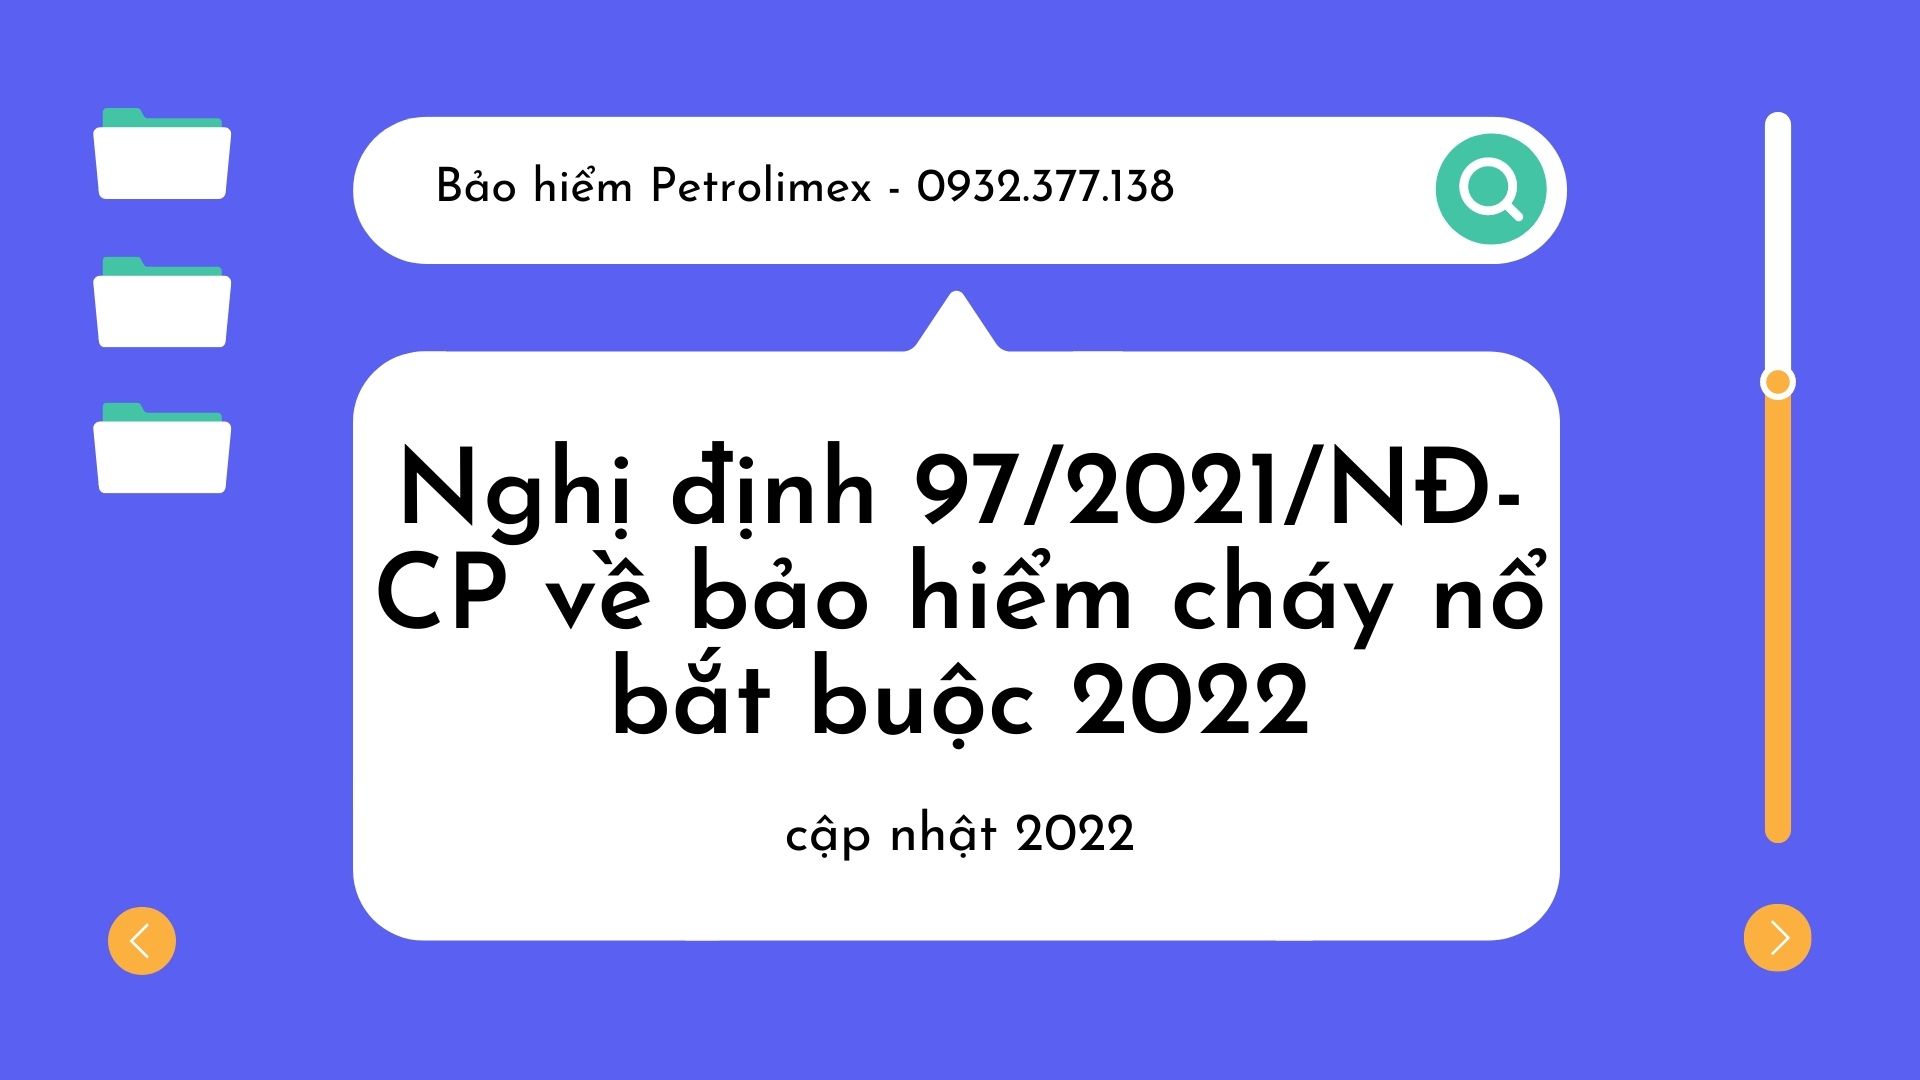 nghi-dinh-97-2021-NĐ-CP-ve-bao-hiem-chay-no-bat-buoc-2022